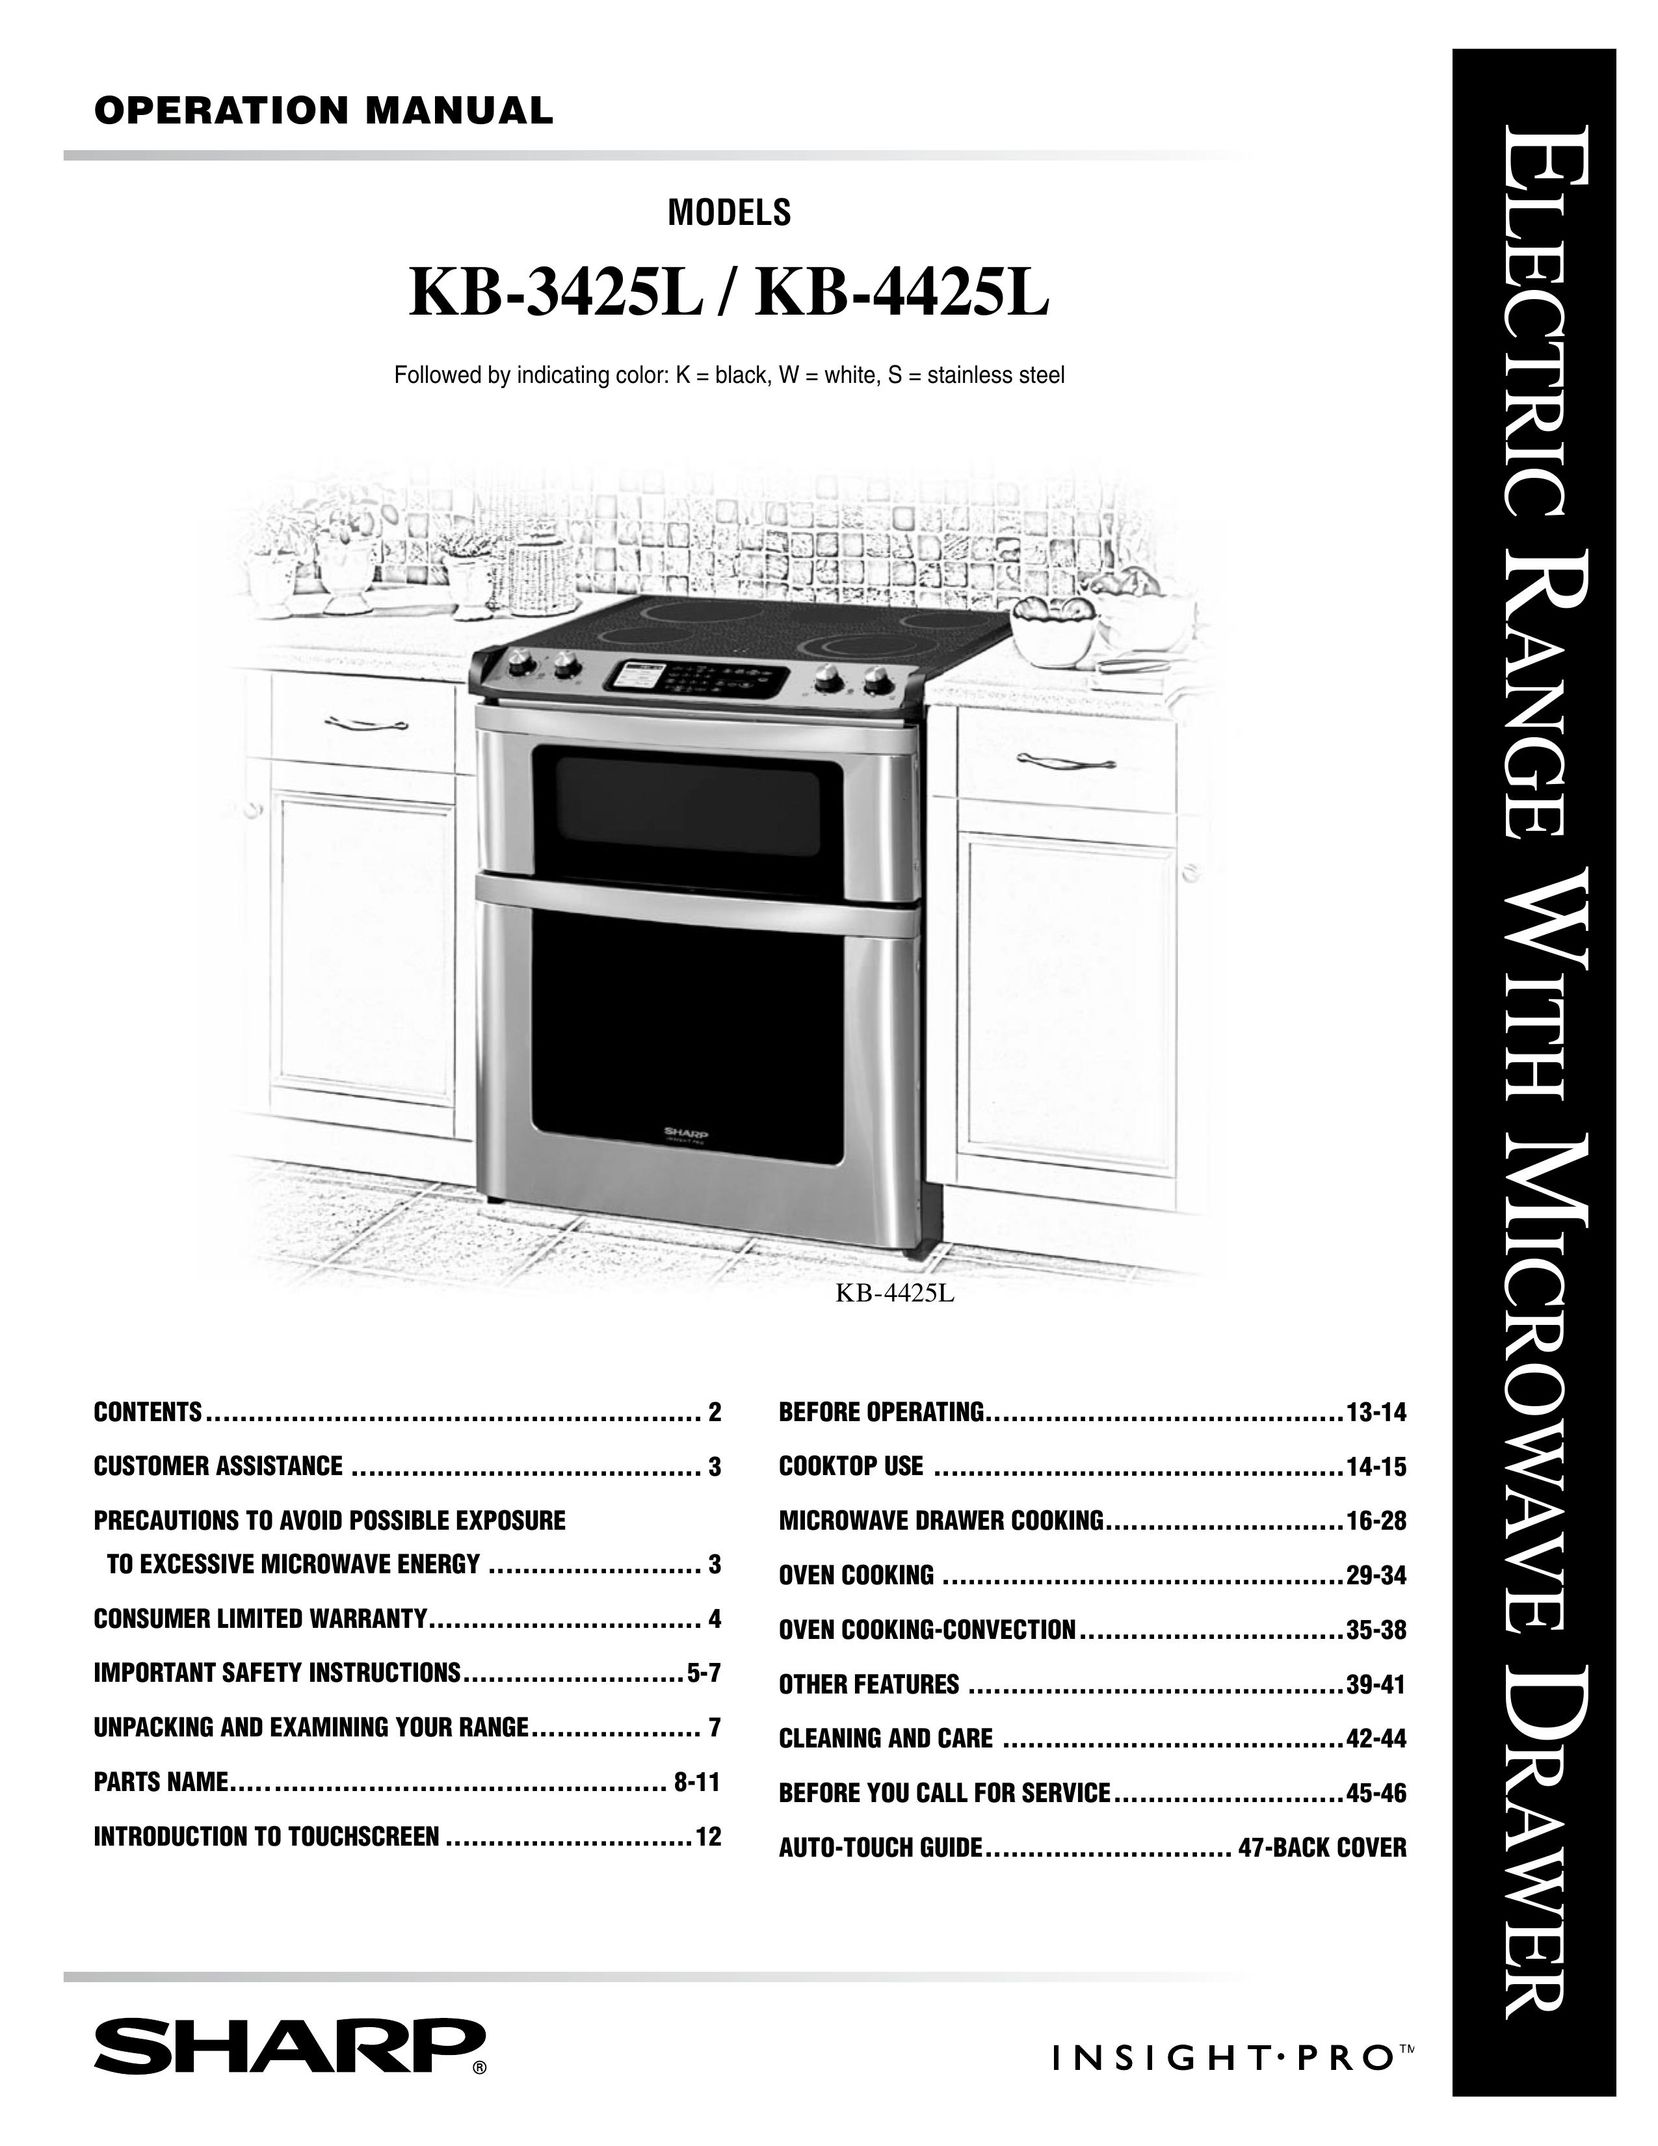 Sharp KB-4425L Microwave Oven User Manual